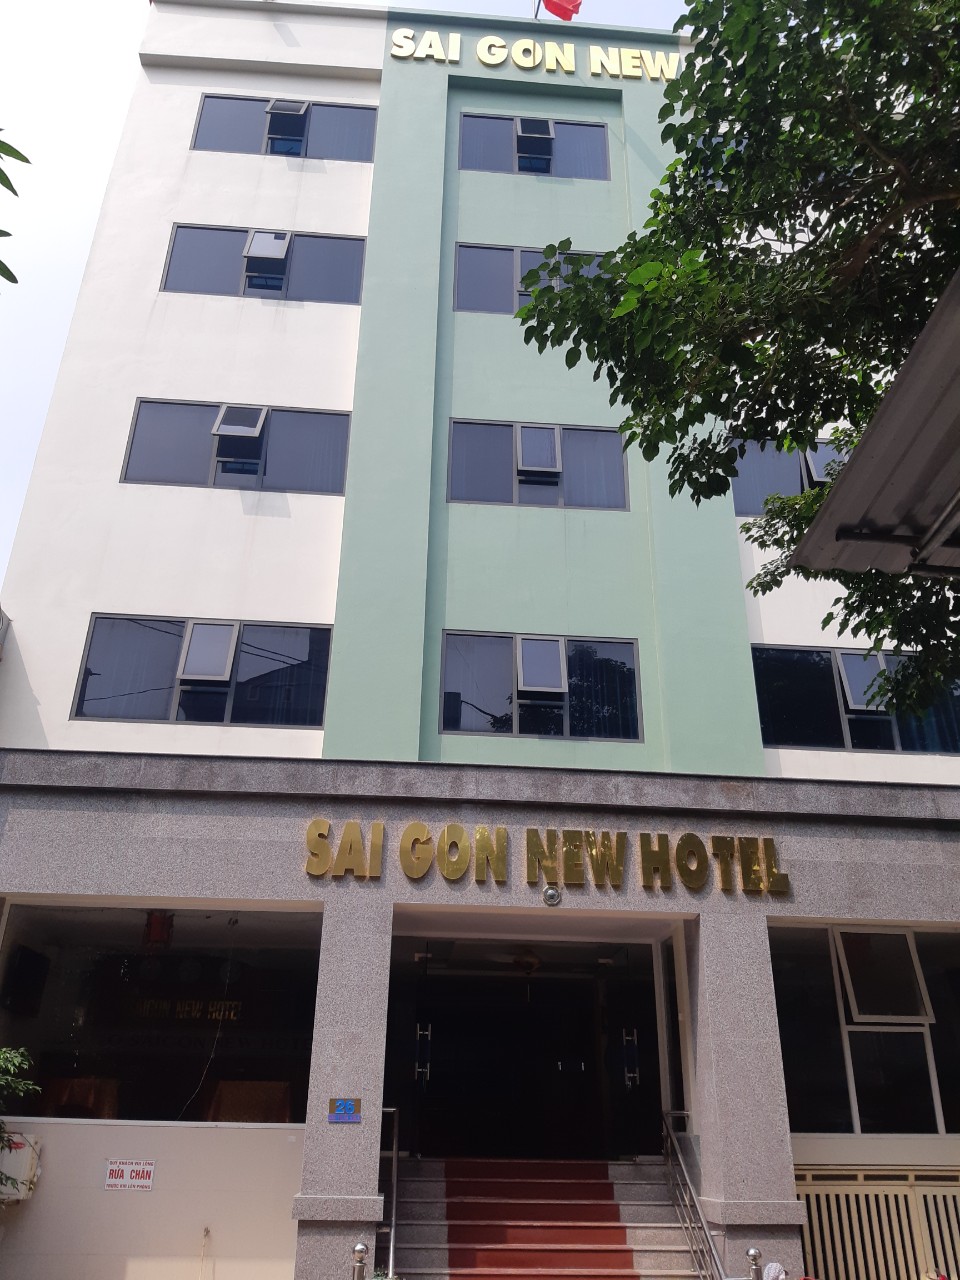 Sai gon New Hotel